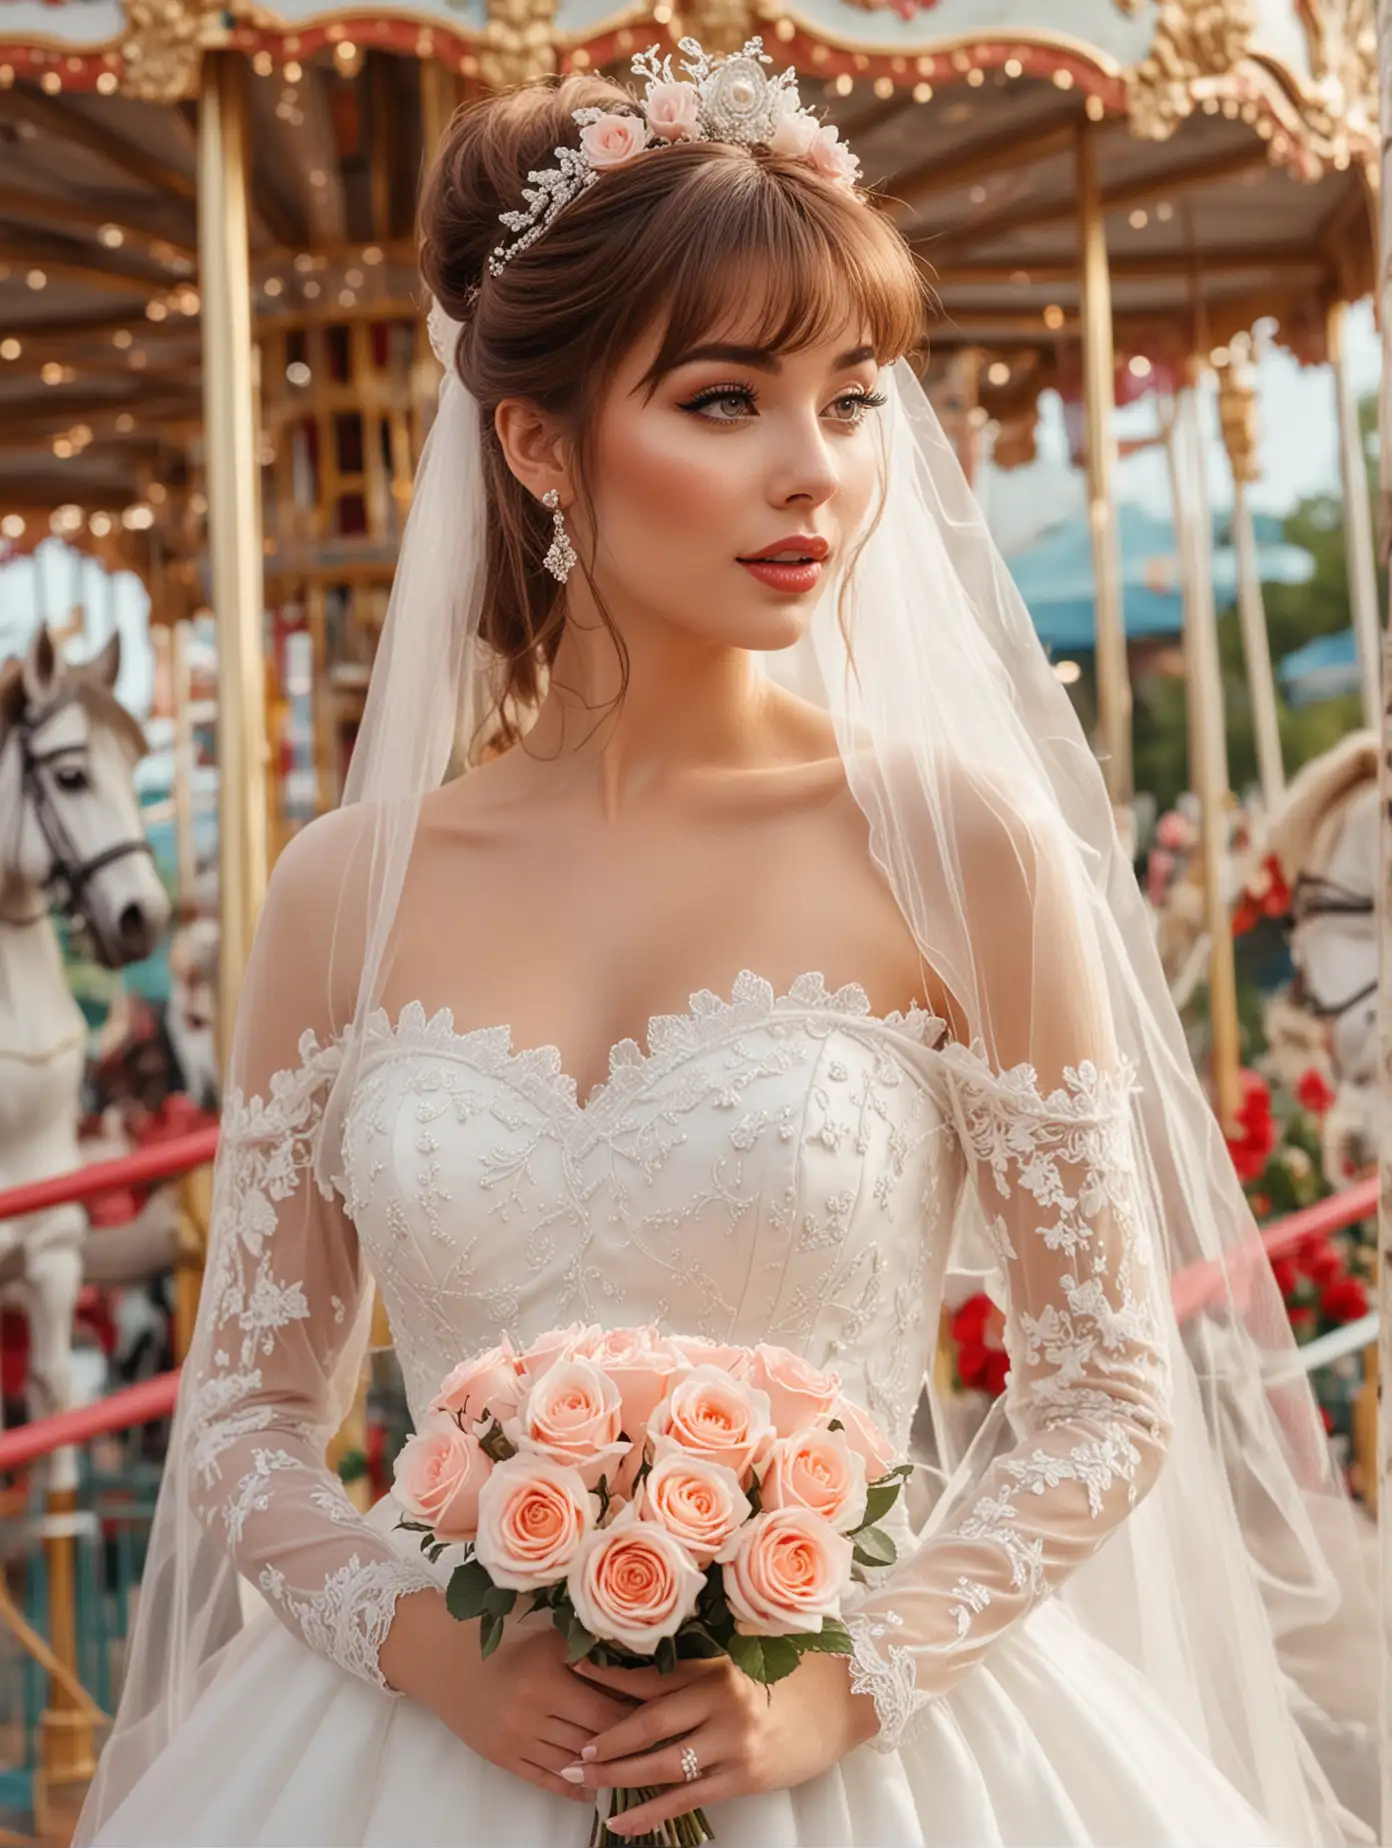 Elegant Bride with Roses at Carousel Amusement Park